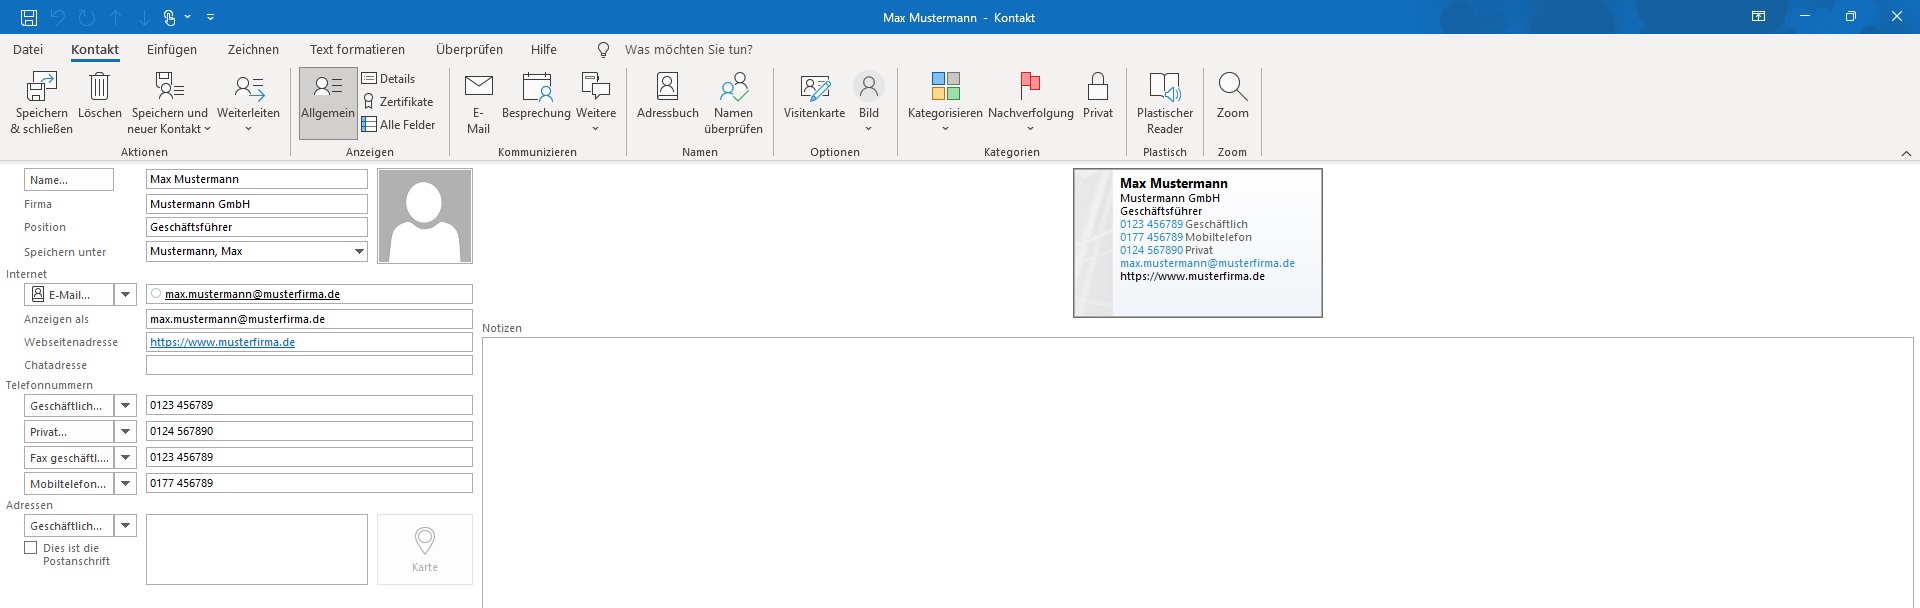 Digitale Visitenkarte im vcf-Format über Microsoft Outlook erstellen